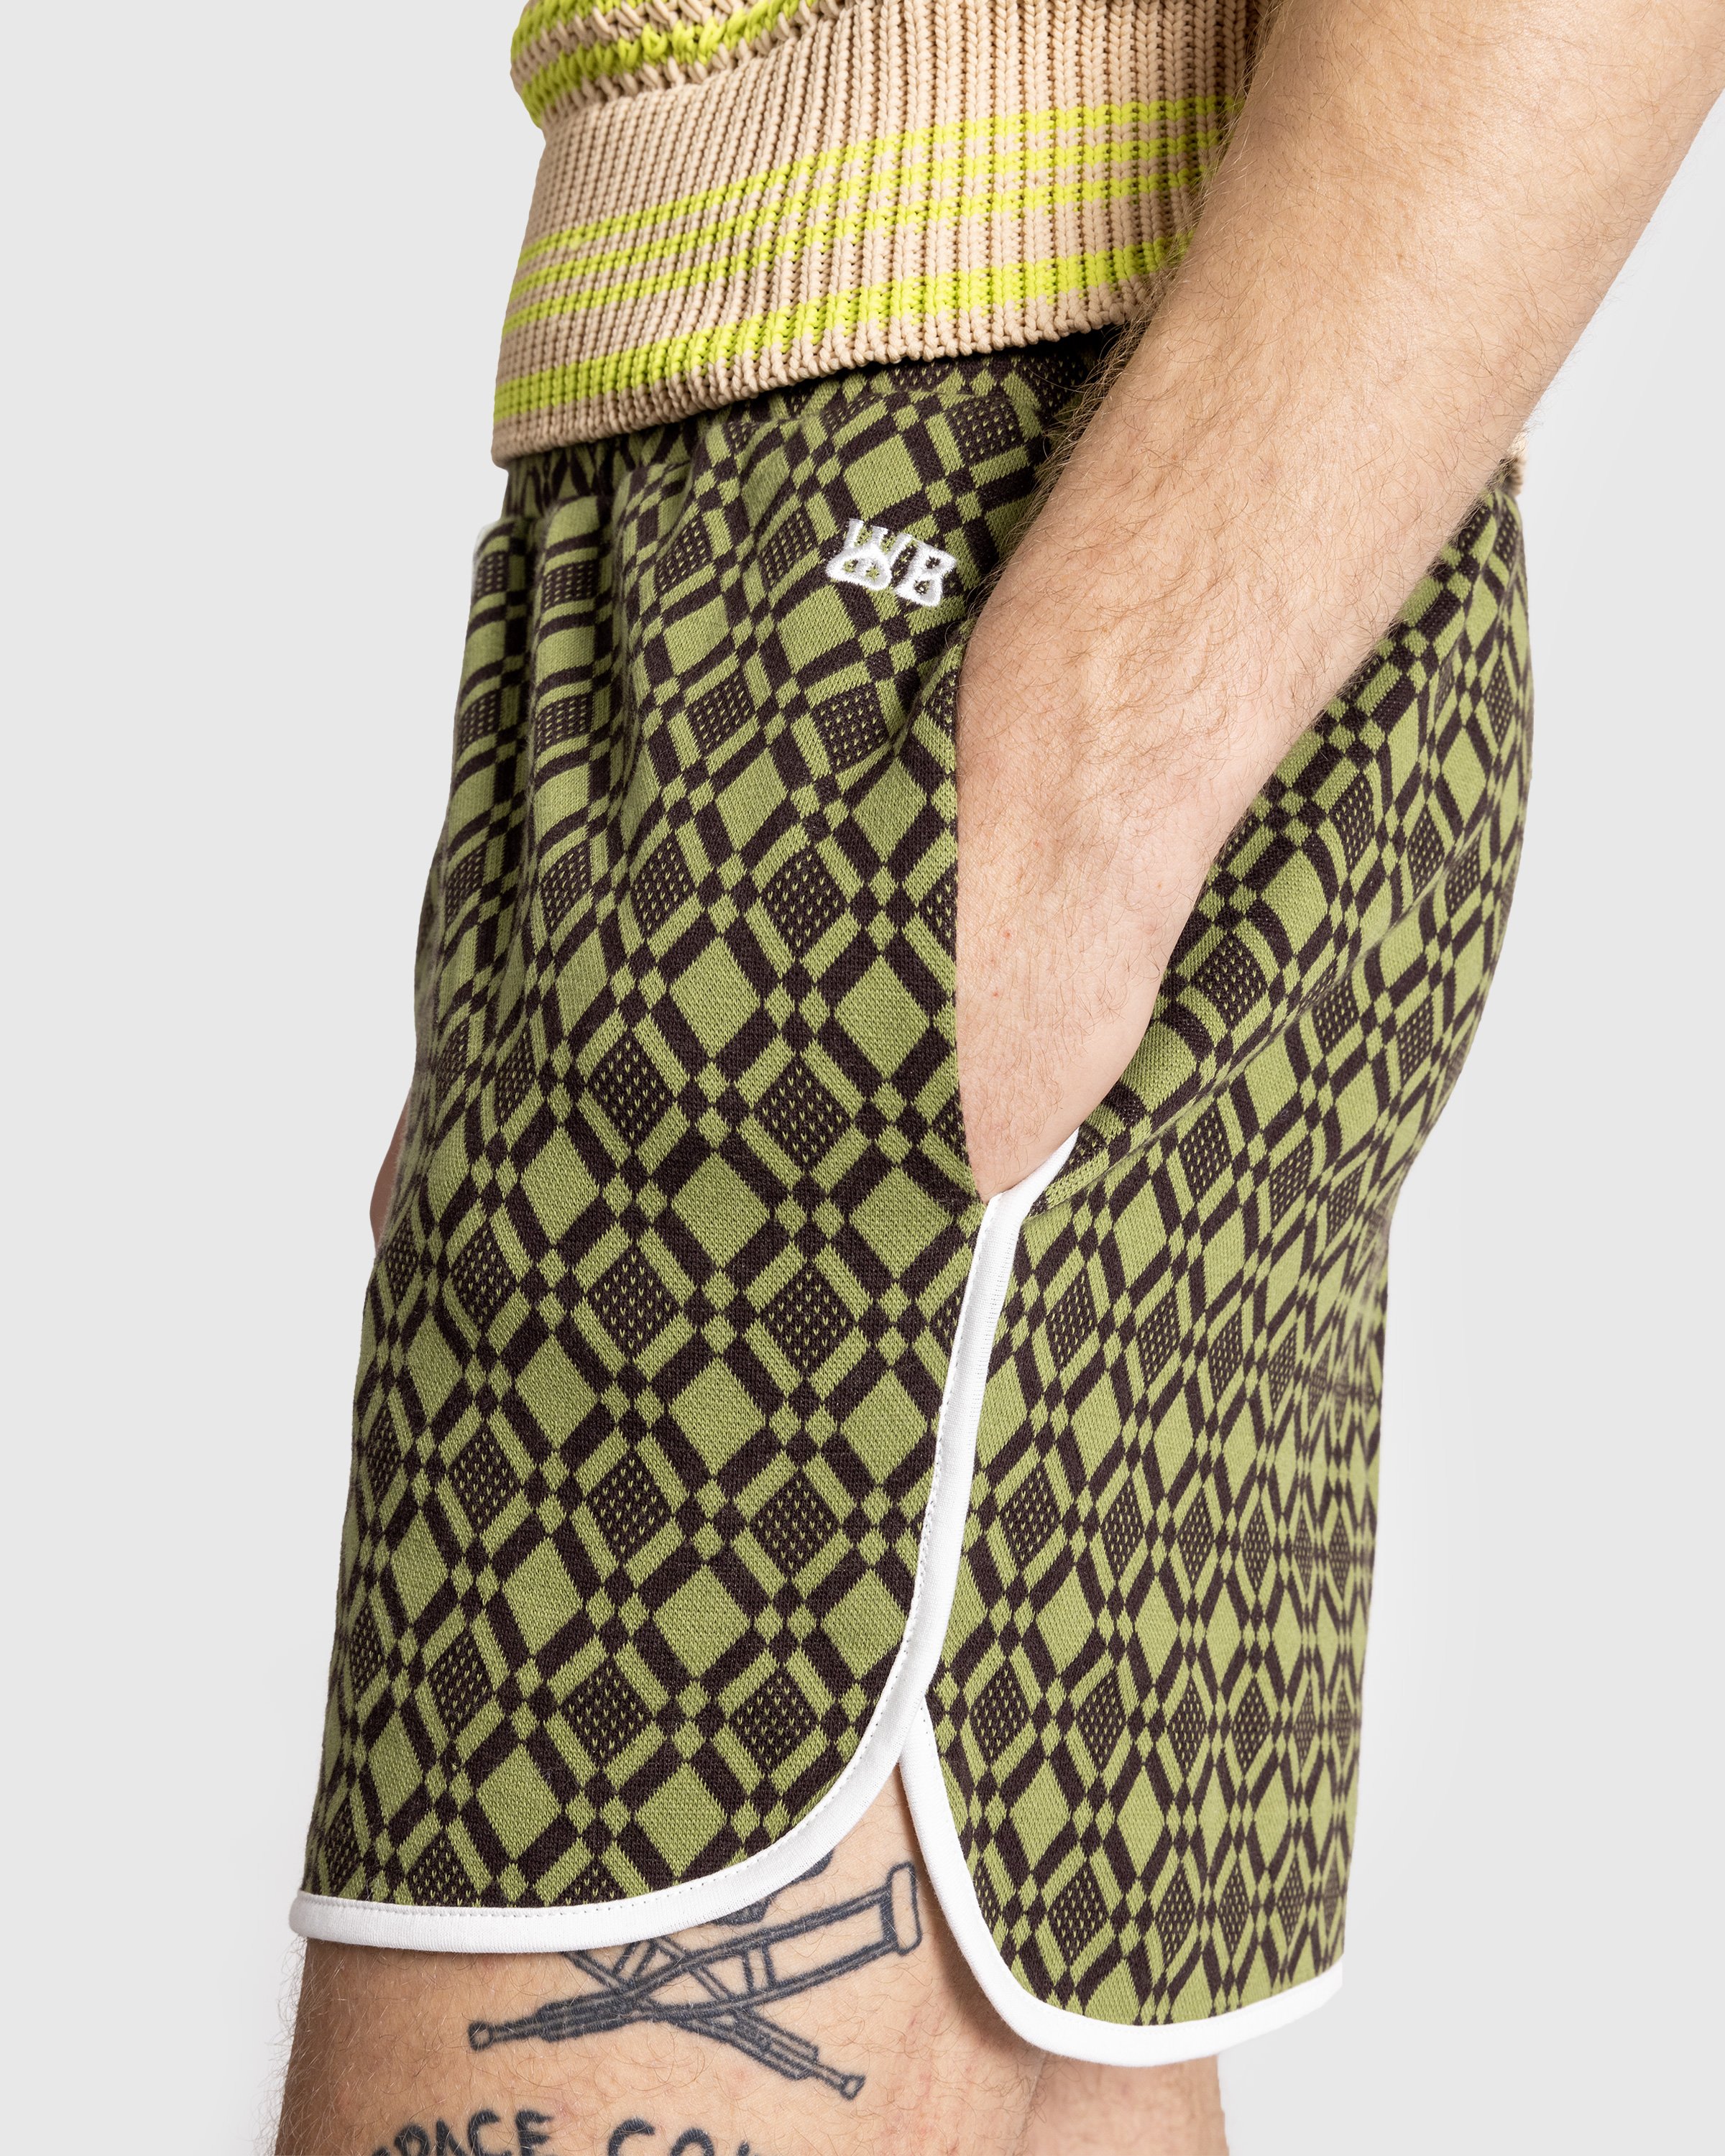 Wales Bonner - Jacquard Olive And Dark Brown Shorts - Clothing - Green - Image 5